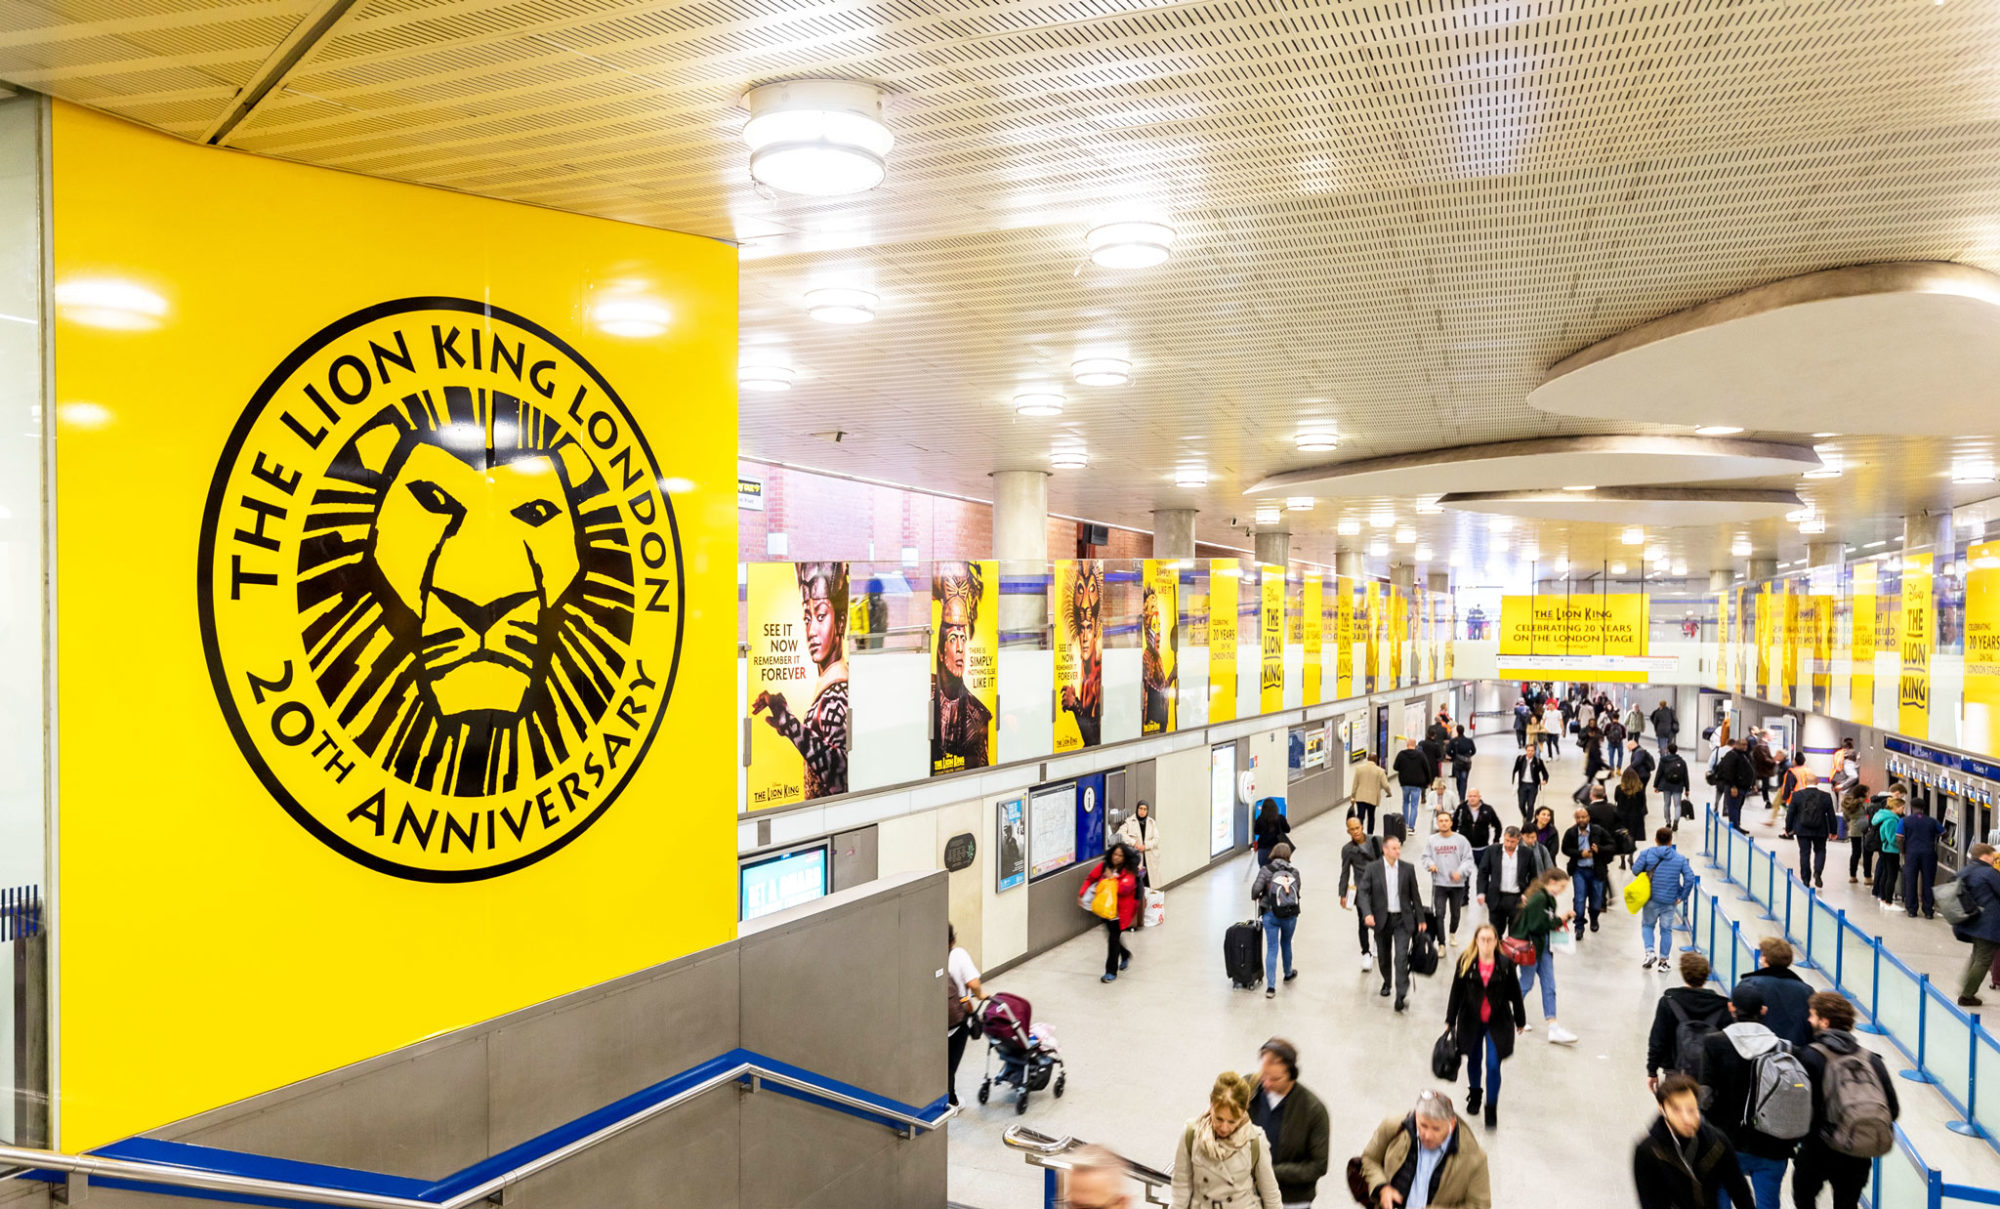 The Lion King hero banner